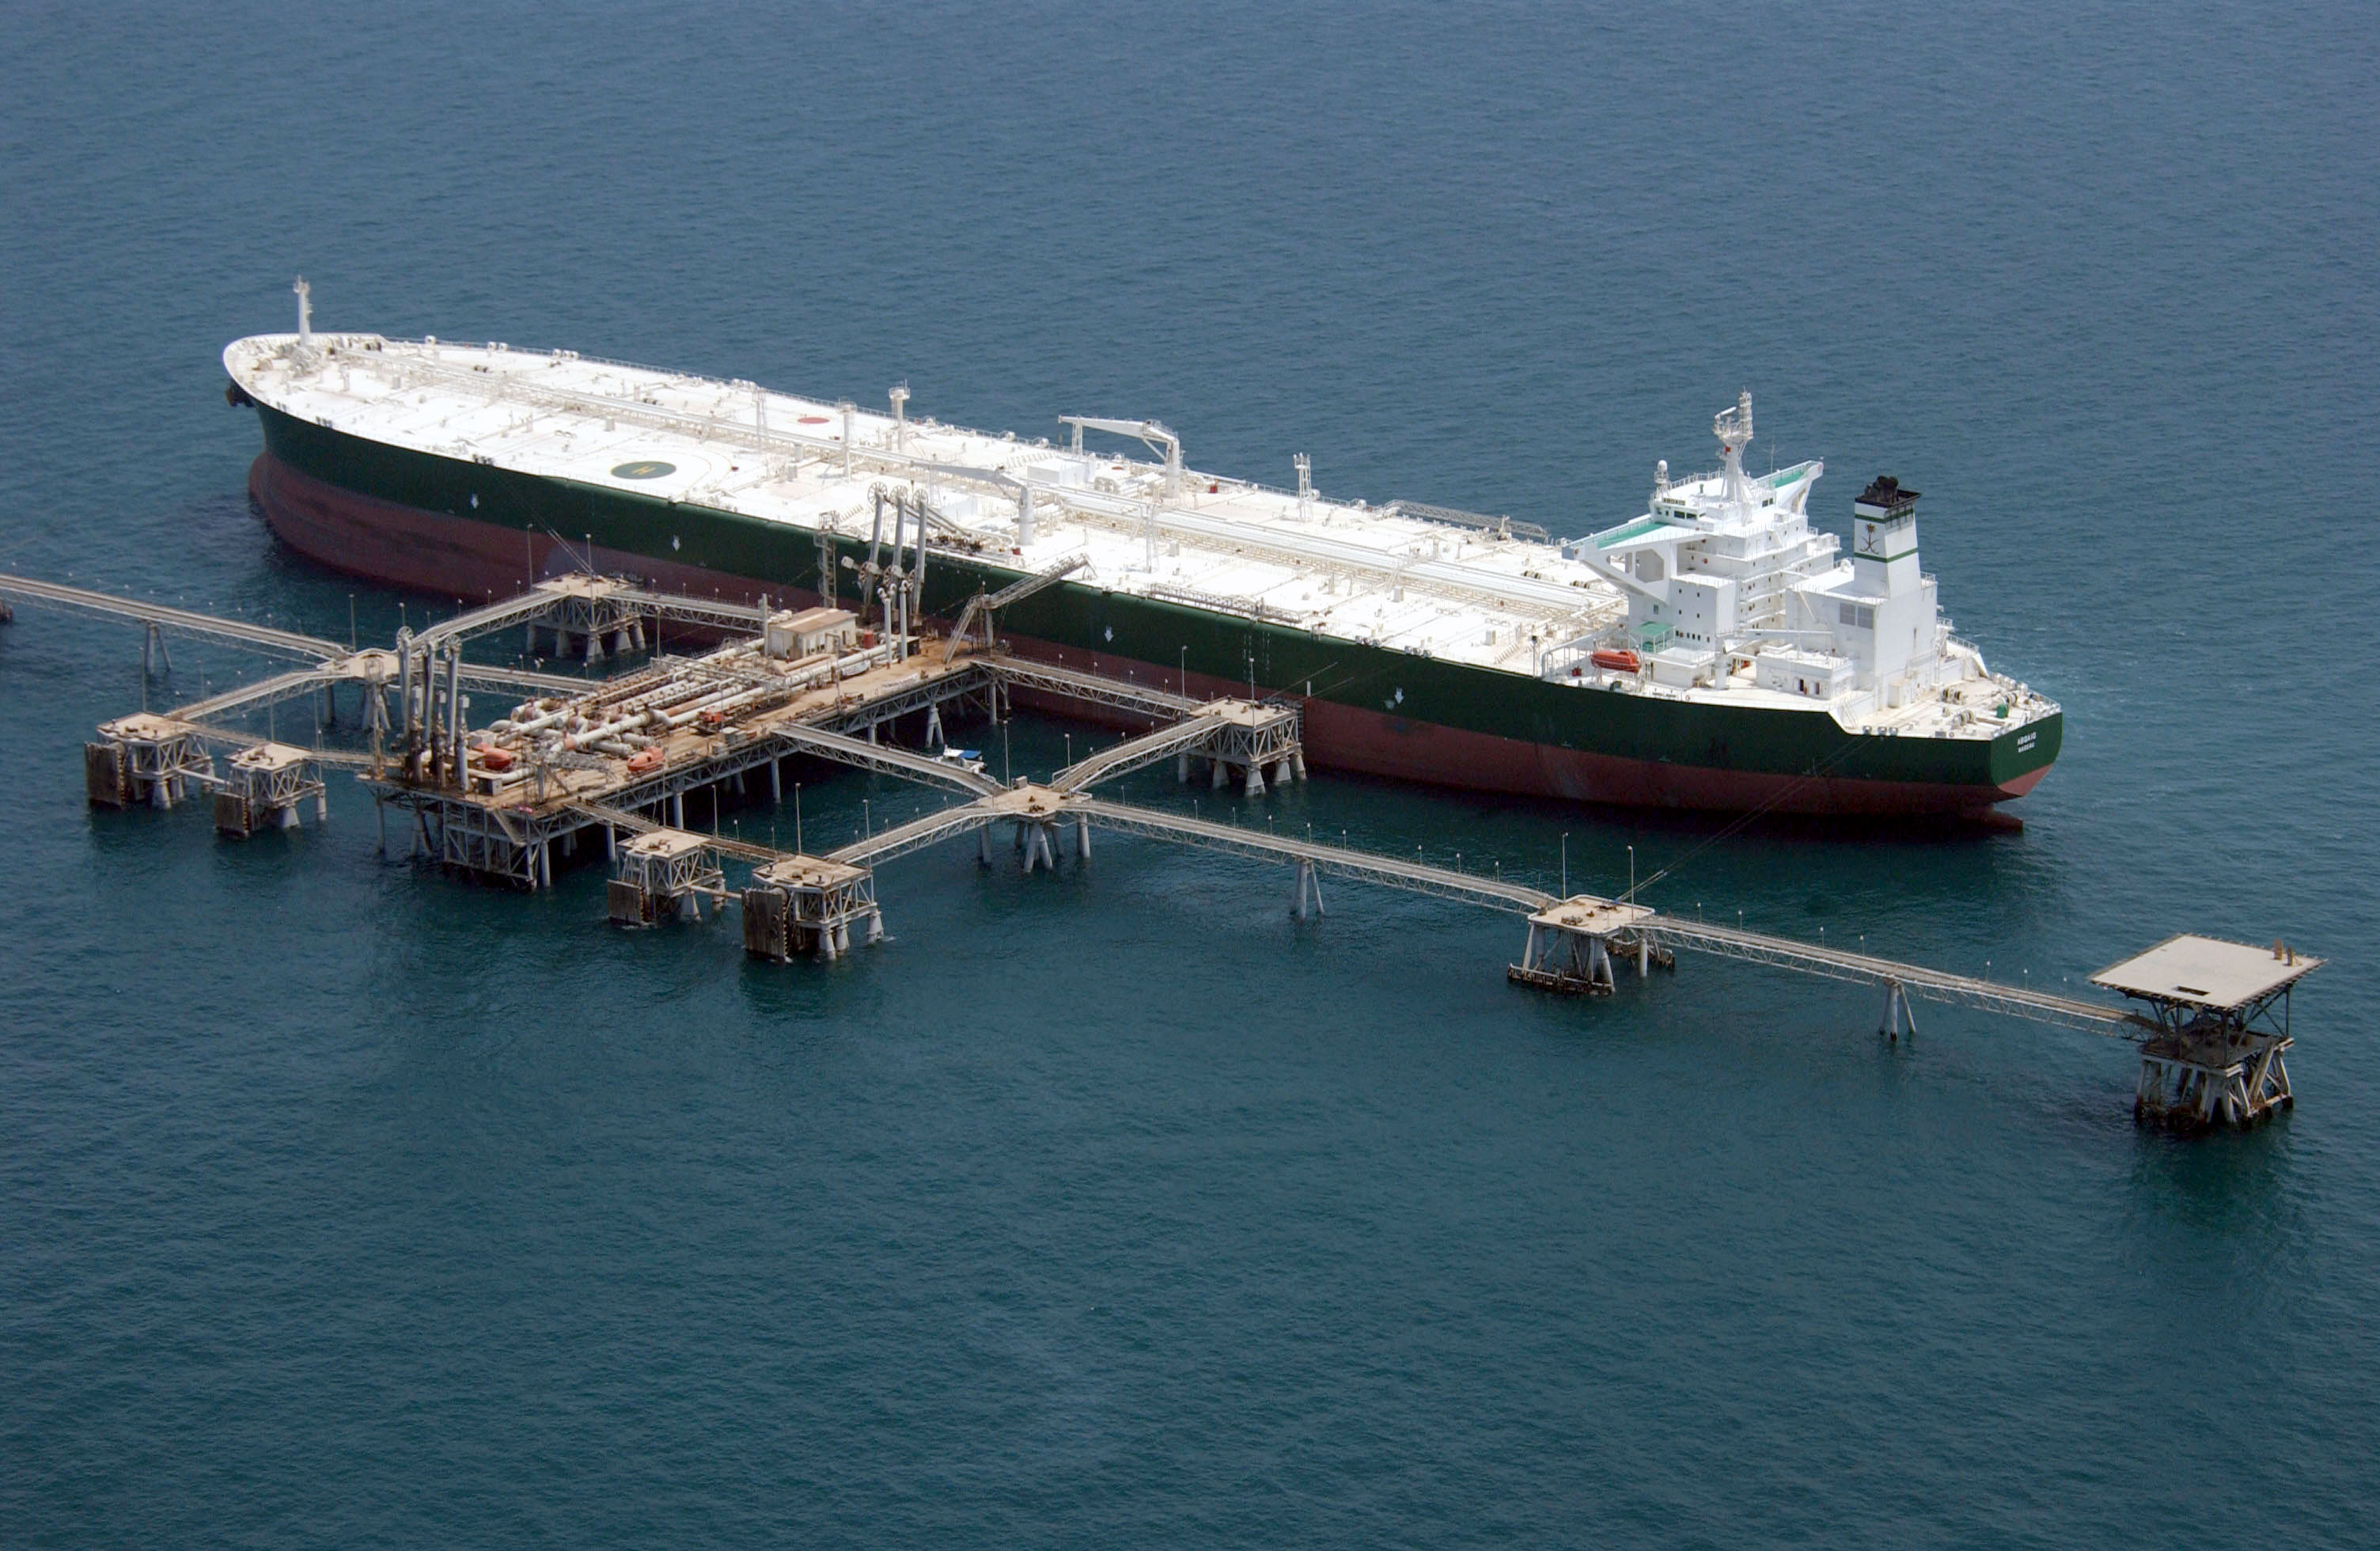 File:Oil tanker Abqaiq in 2003.jpg - Wikimedia Commons